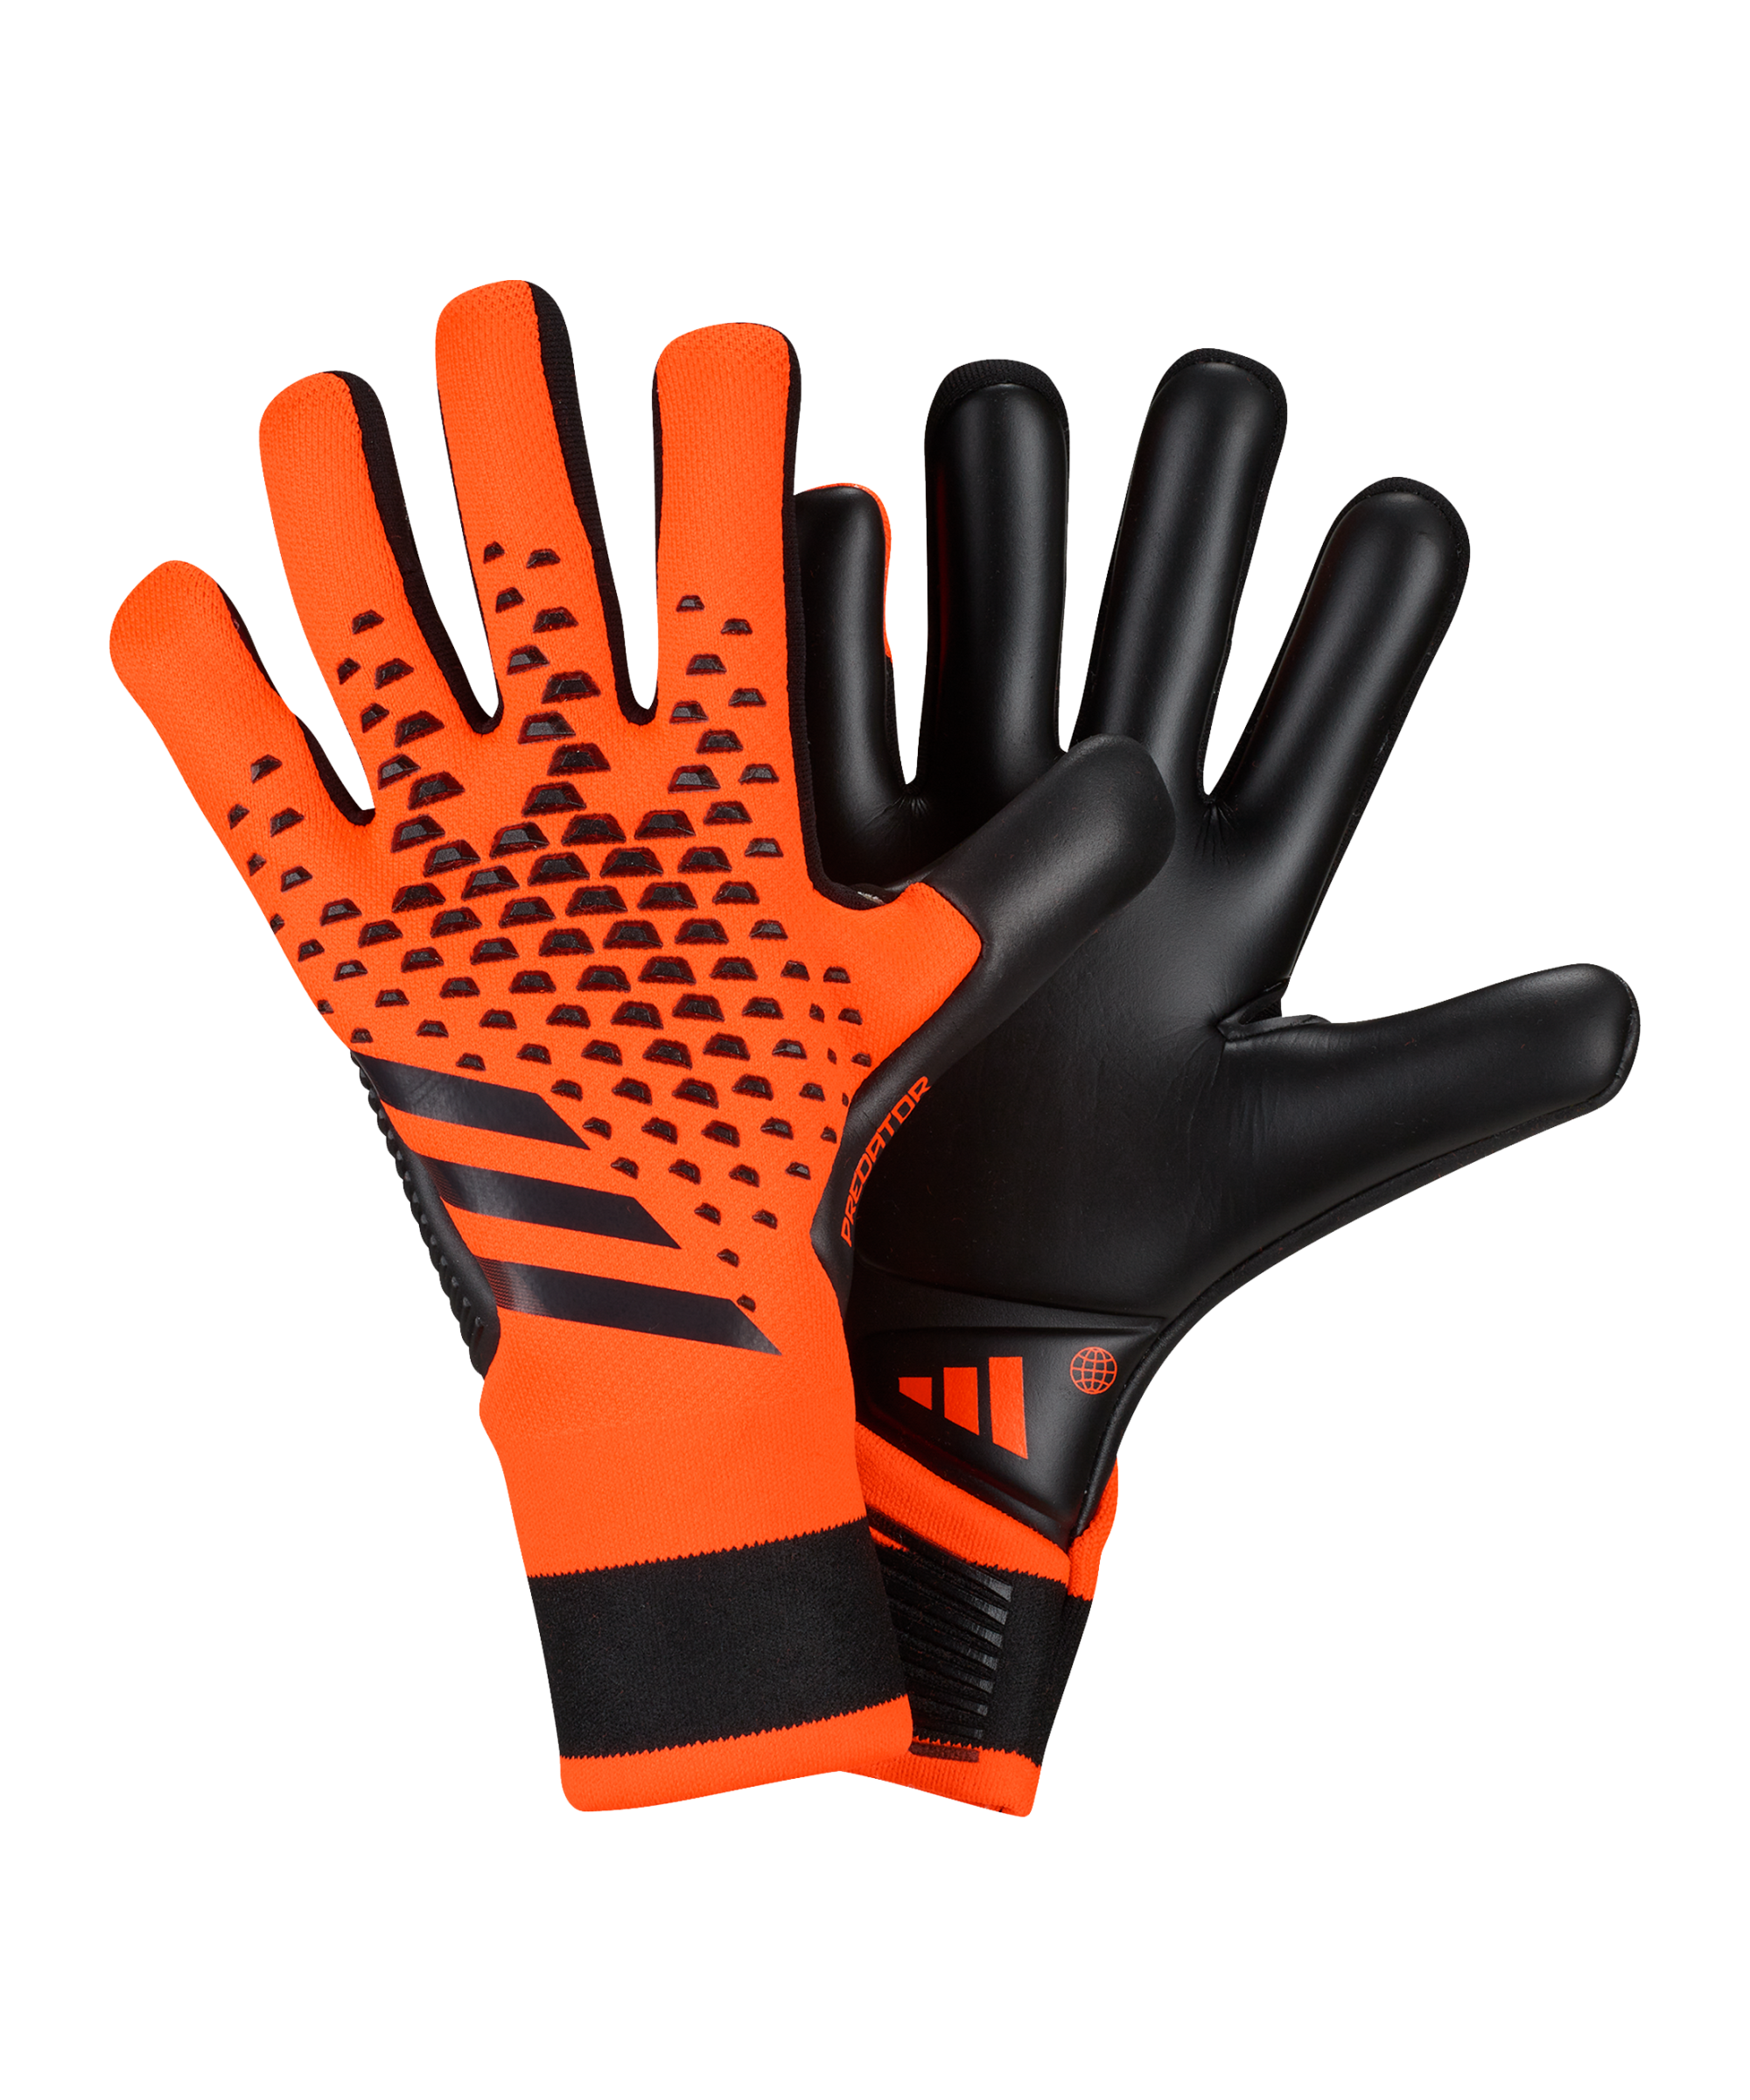 Elite Sport 2022 Neo Orange Goalkeeper Gloves - orange-black, 9